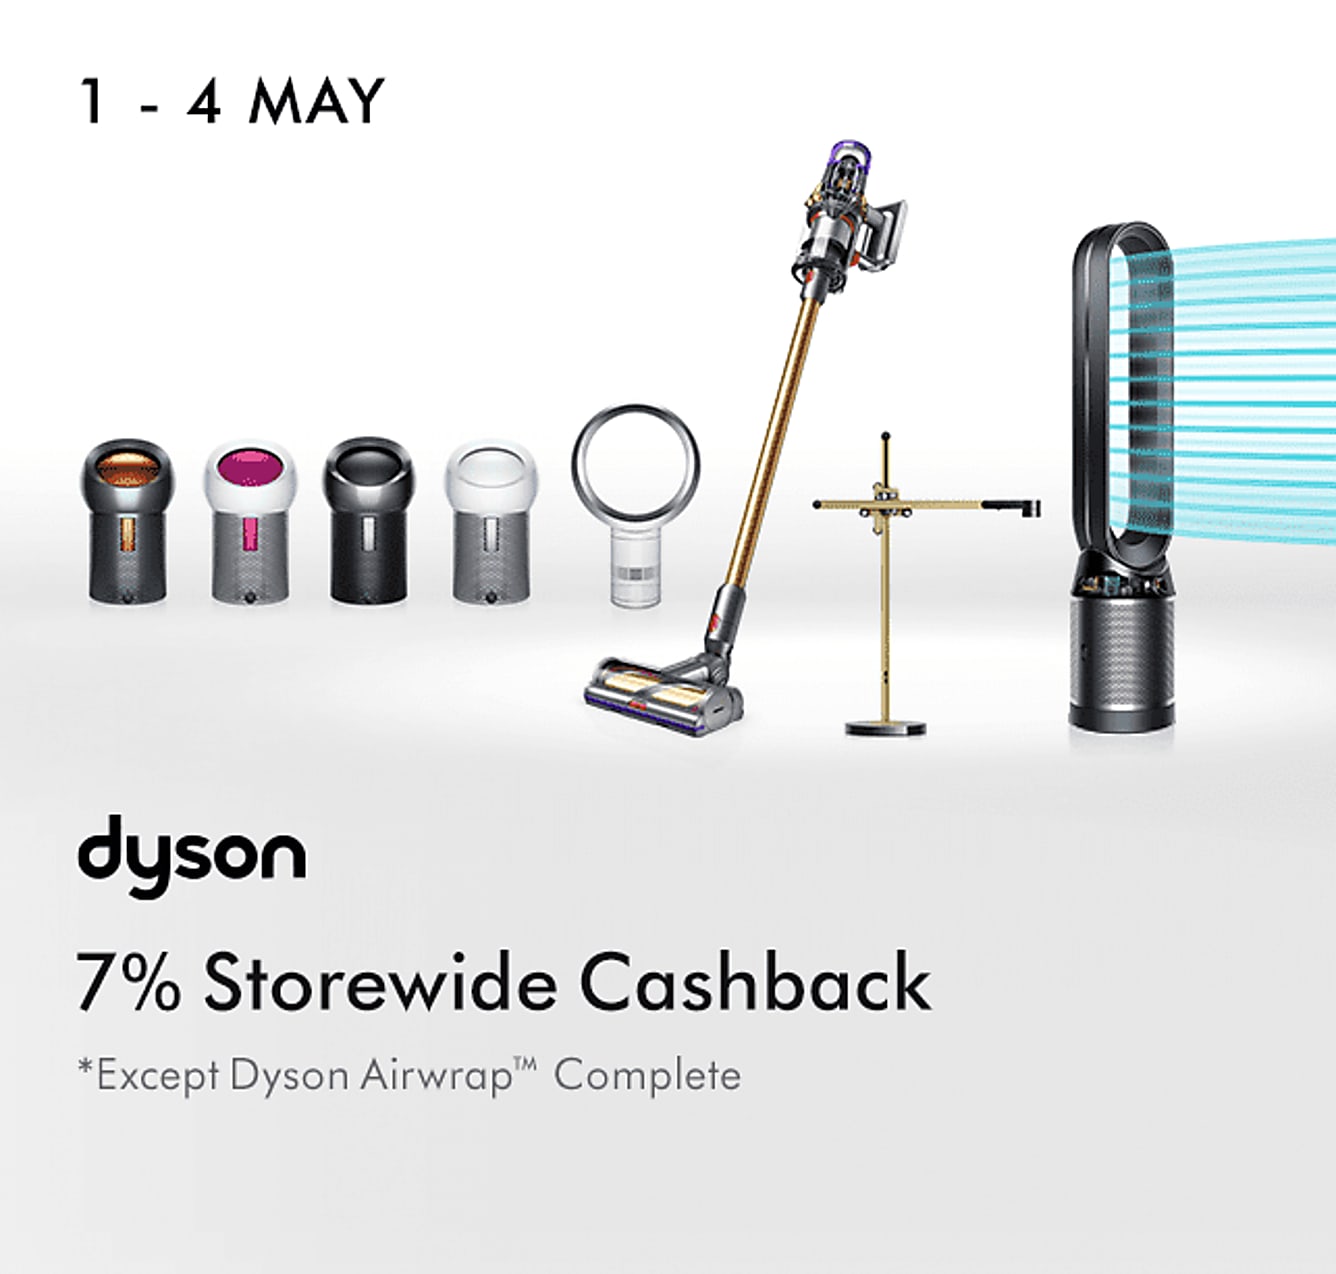 Dyson_Upsize_1 May-4 May 2020